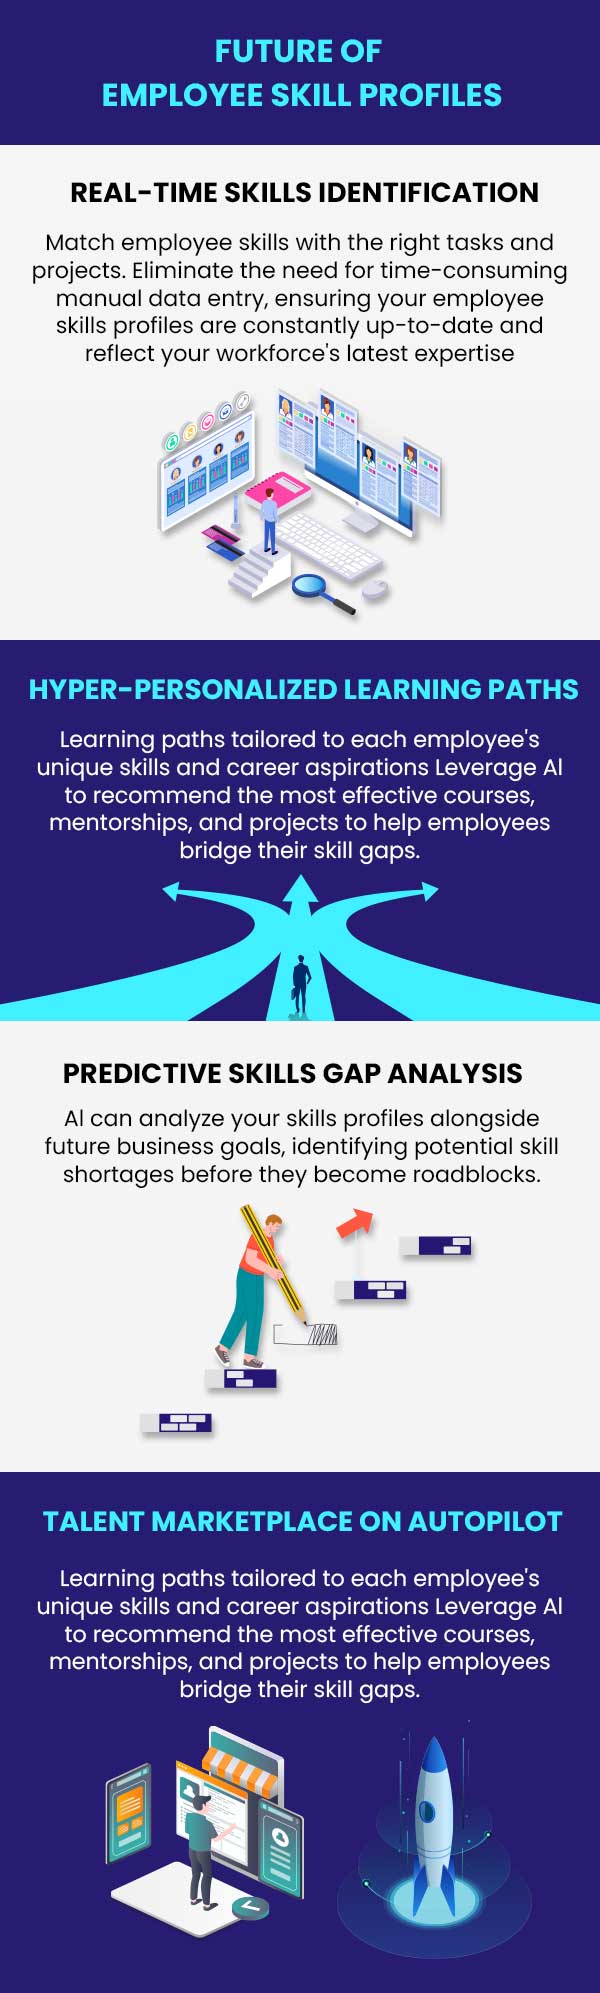 The future of employee skills profiles